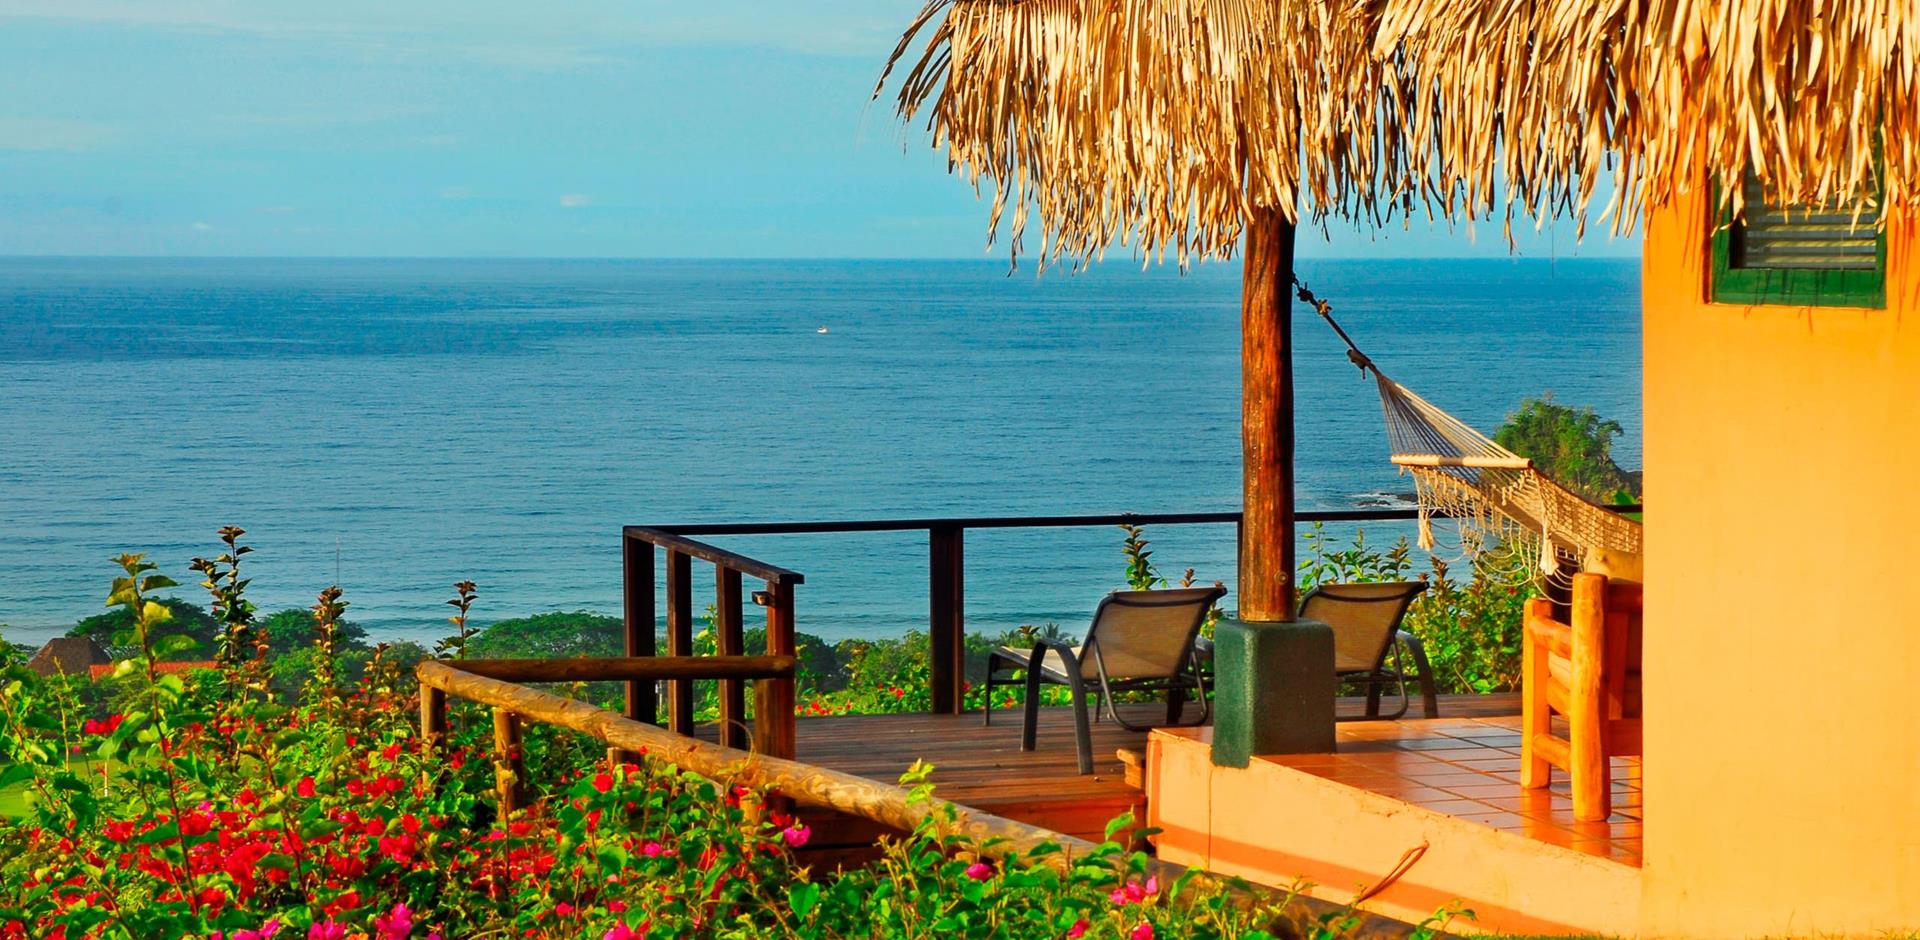 View from Hotel Punta Islita, Costa Rica